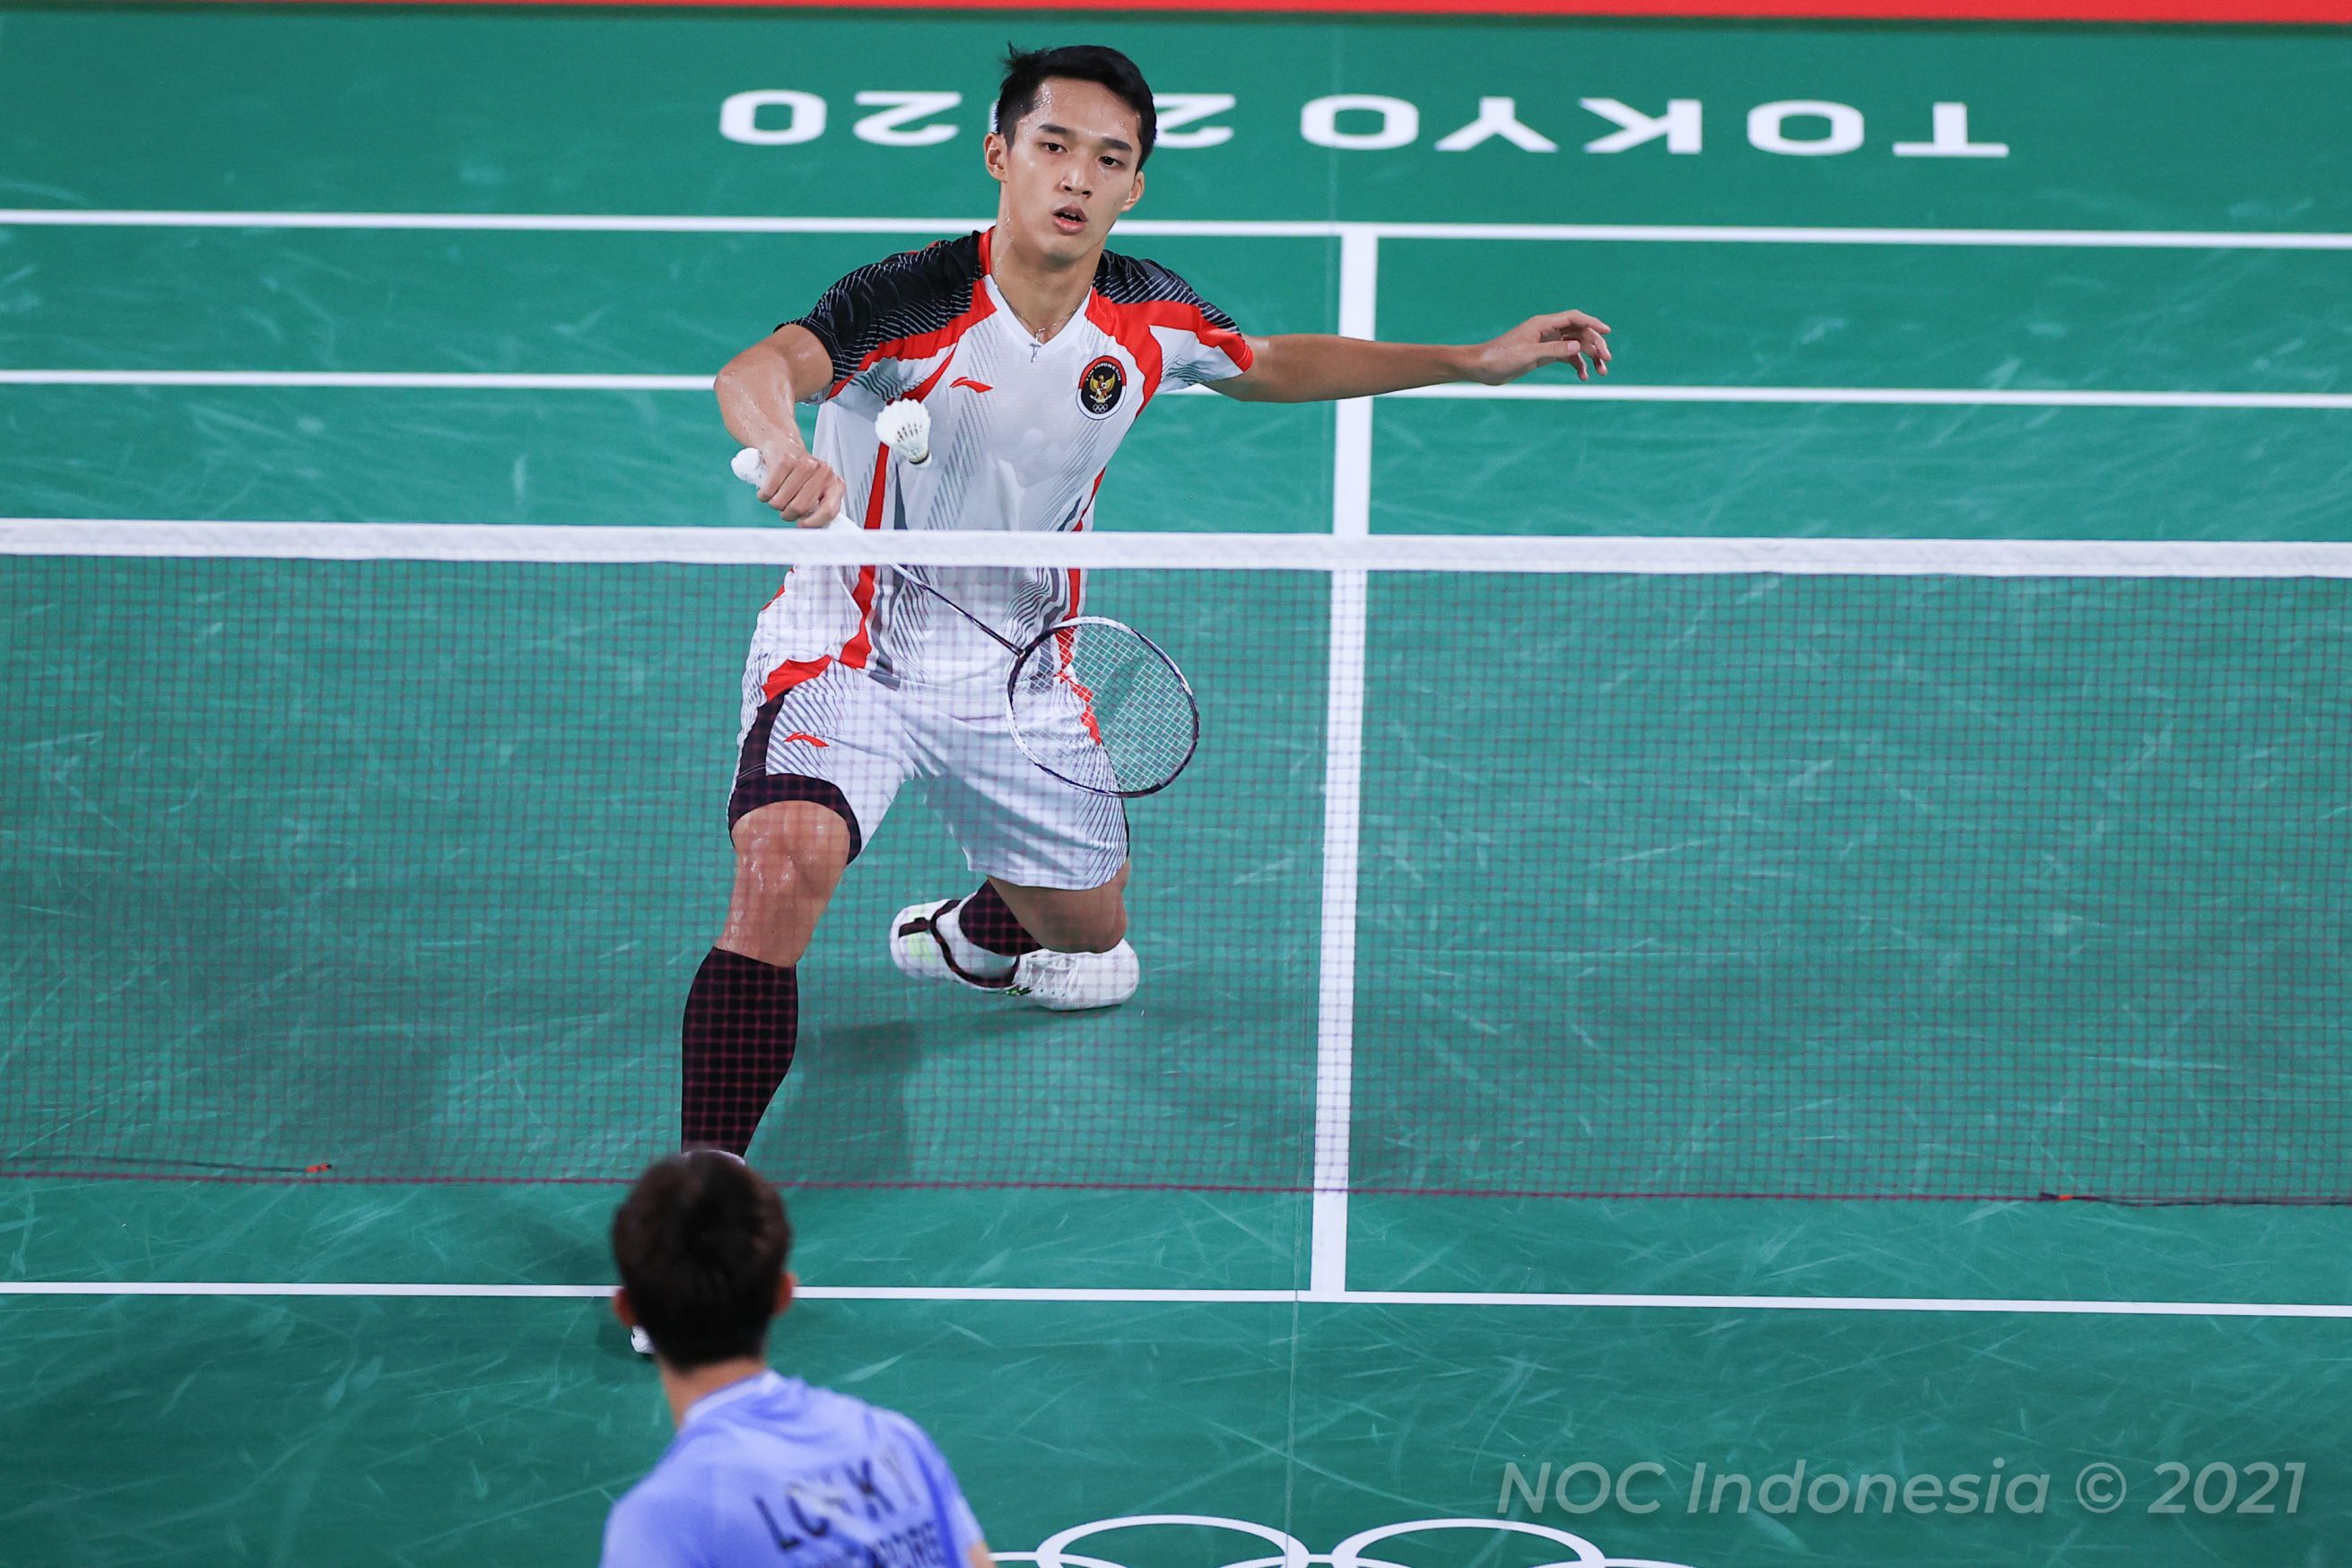 Indonesia Olympic Commitee - Jojo safely through to the next round